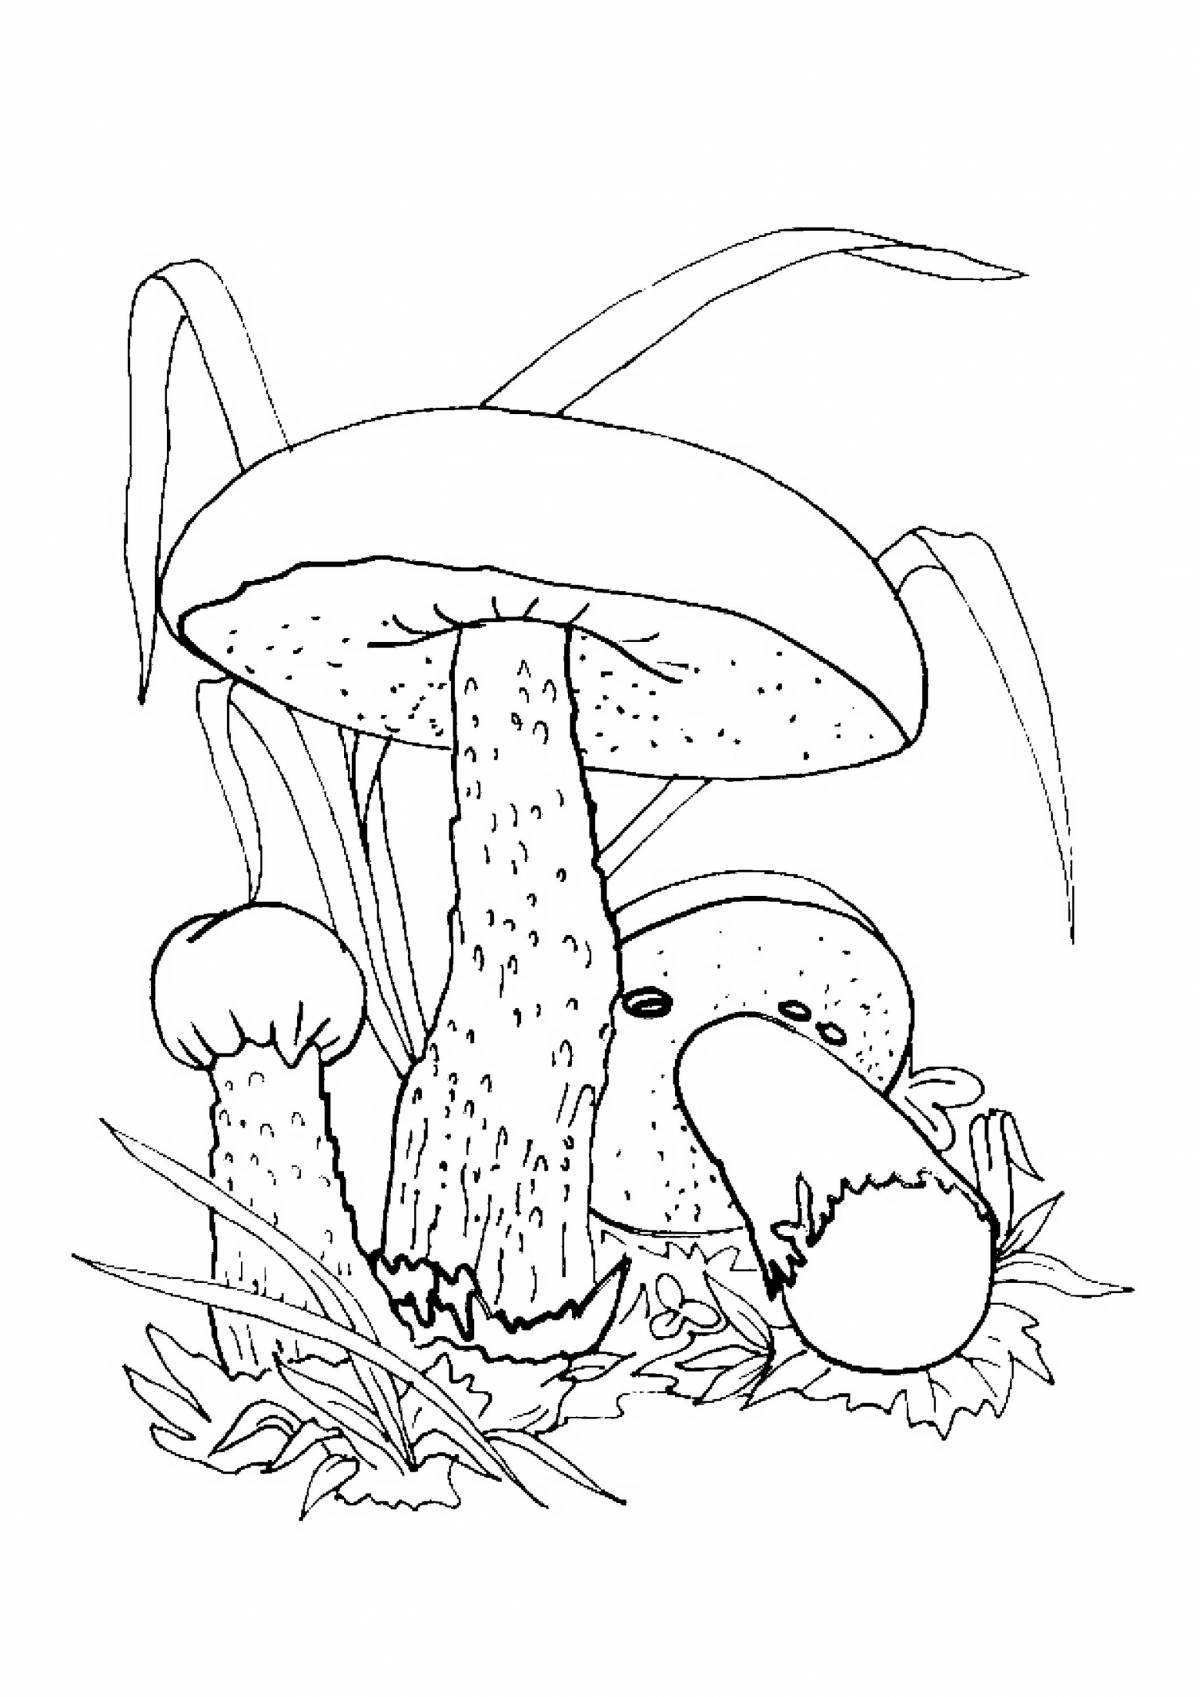 Сияющий рисунок гриба